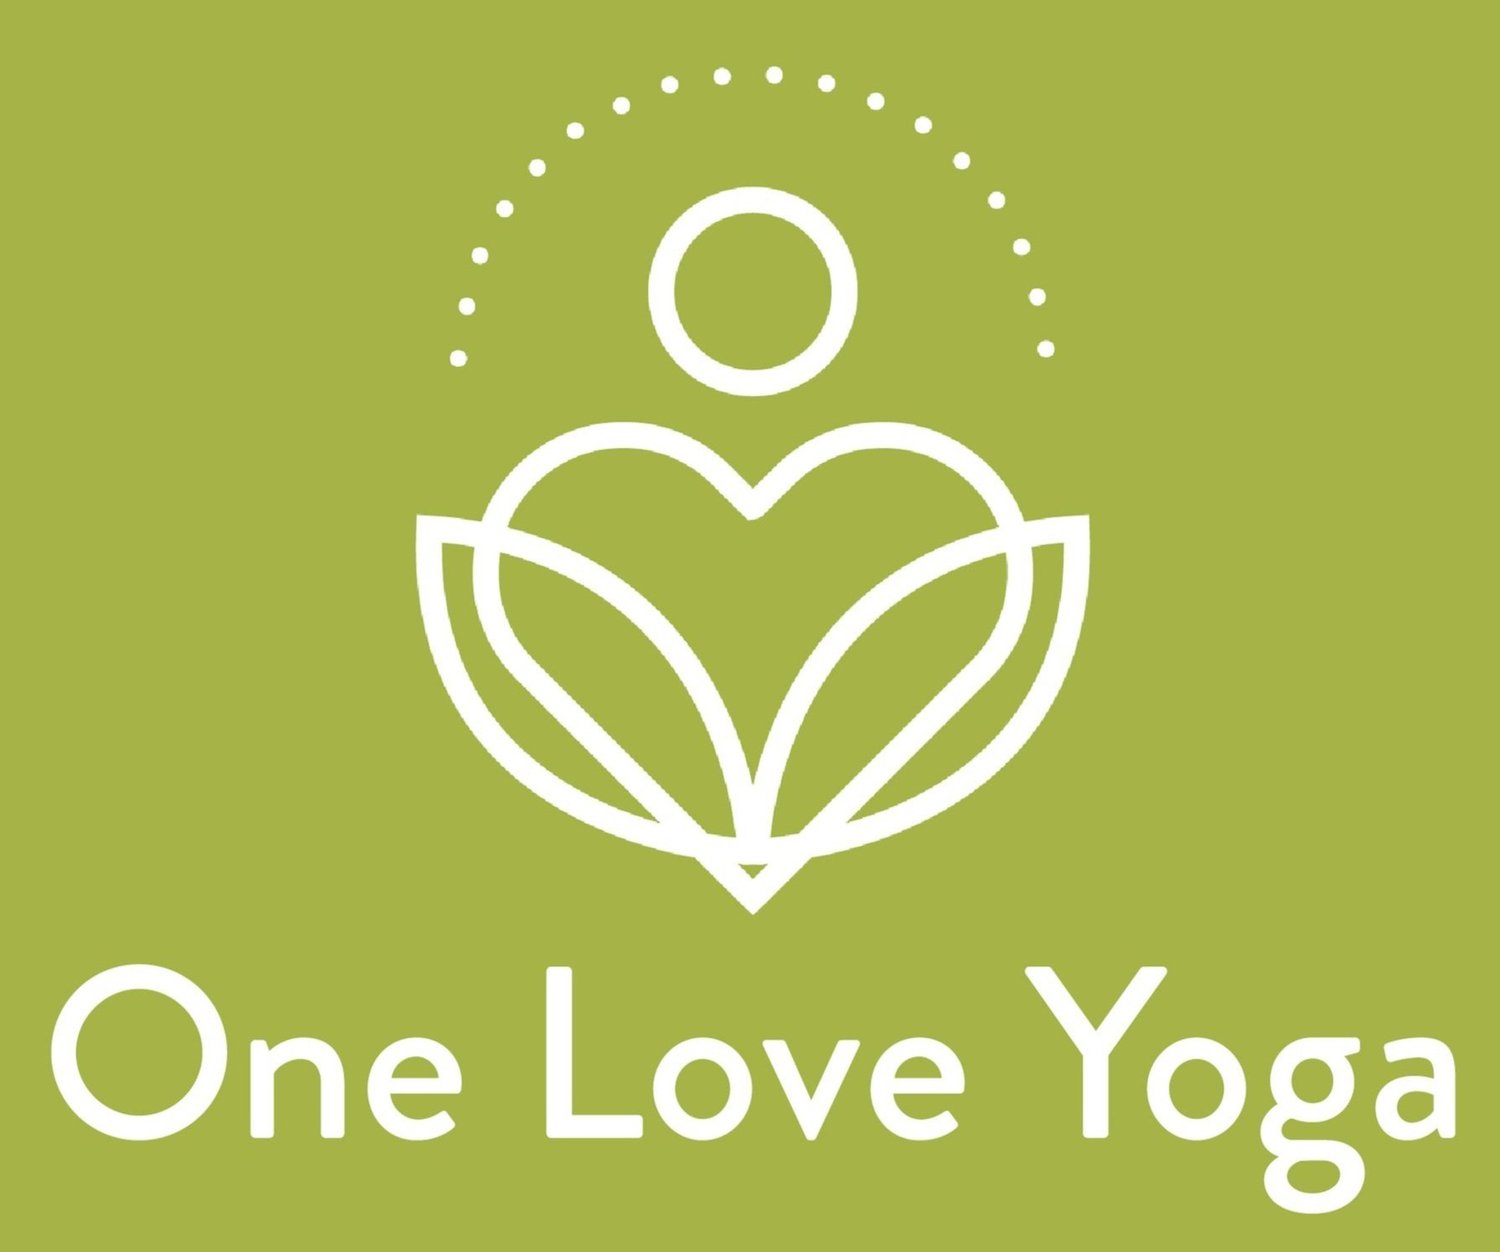 One Love Yoga